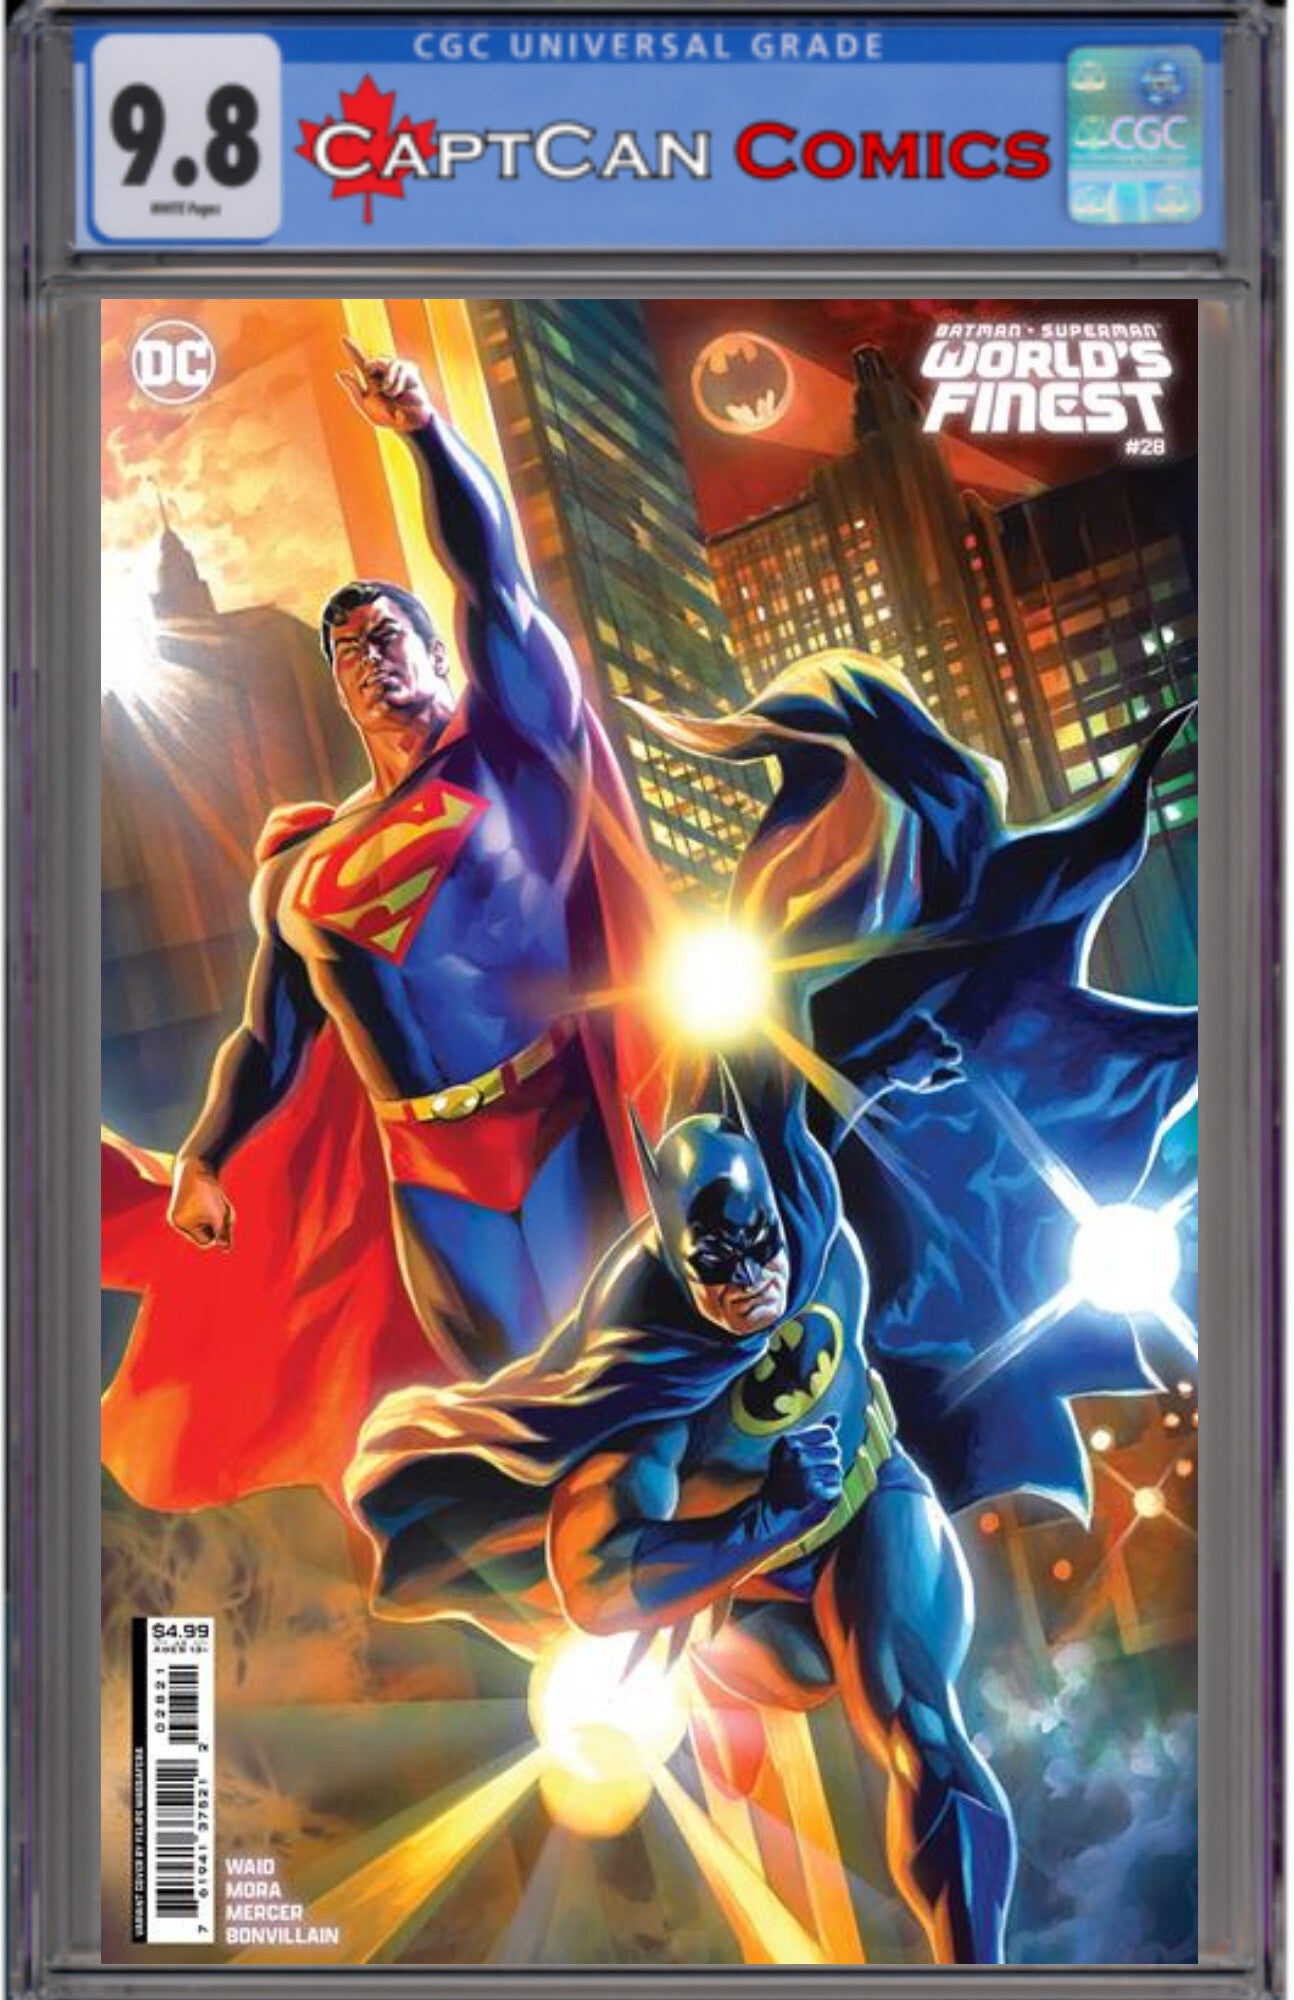 BATMAN SUPERMAN WORLDS FINEST #28 CVR C FELIPE MASSAFERA CARD STOCK VAR